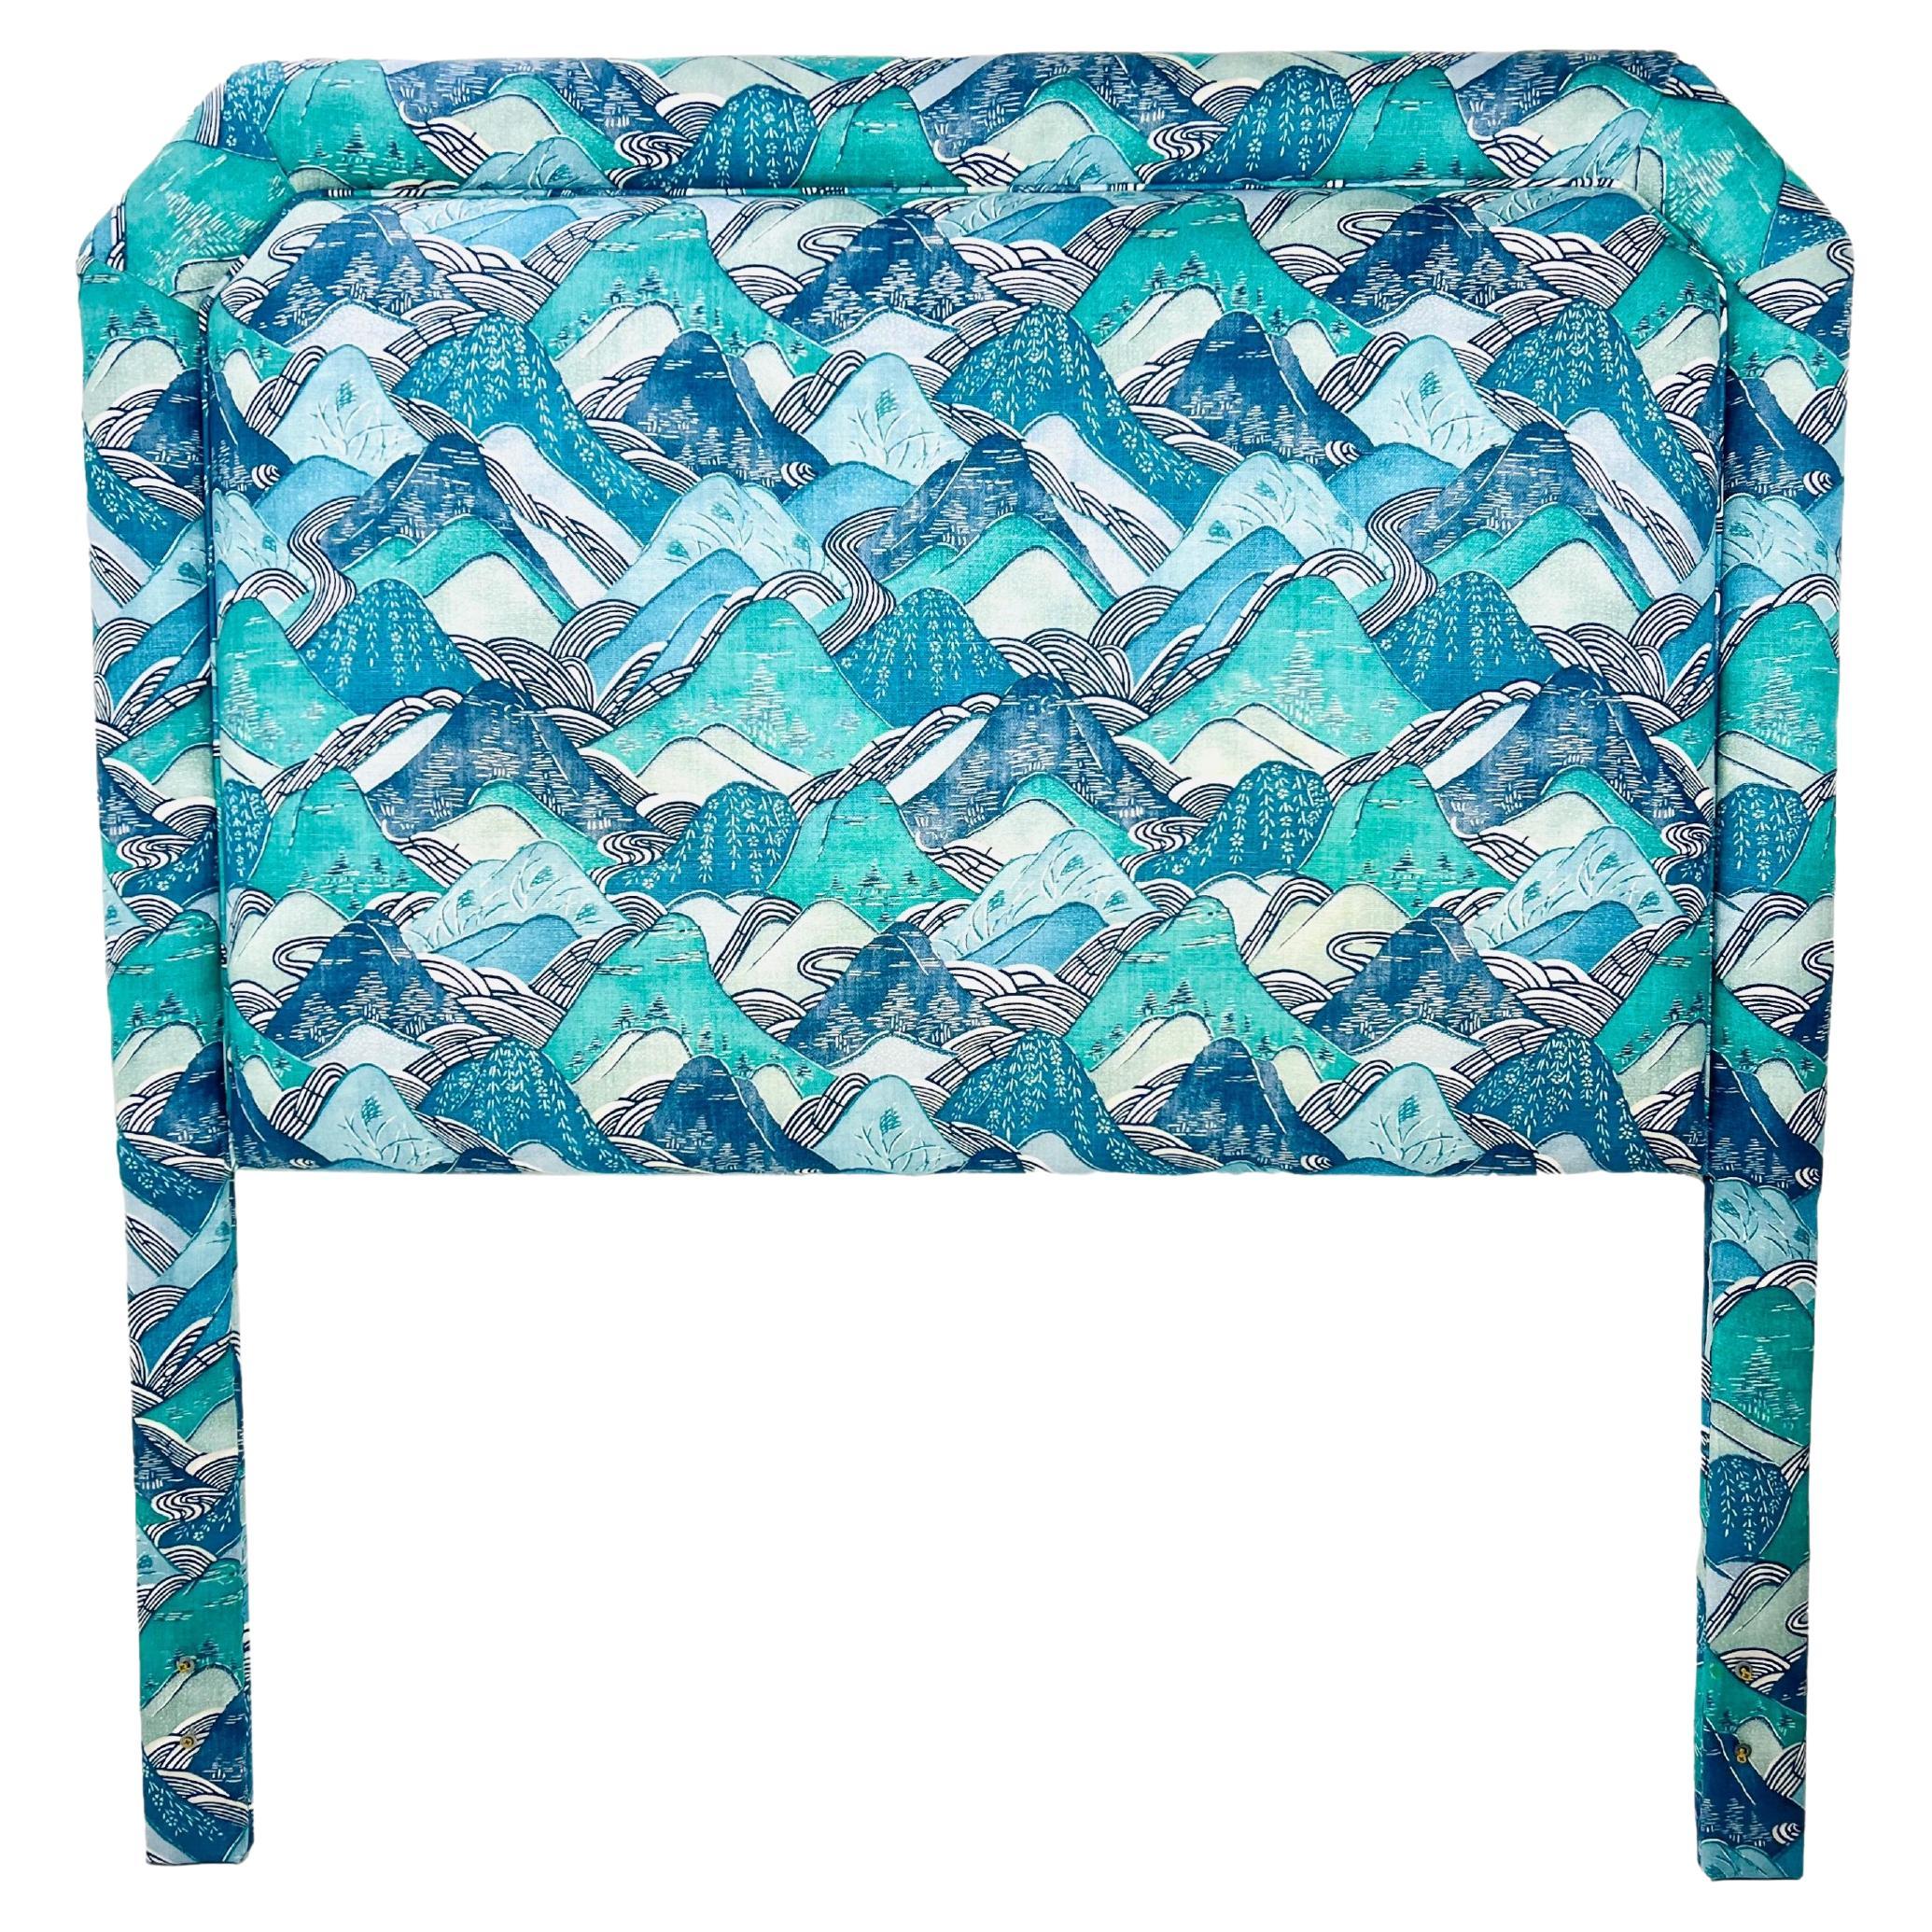 Queen Headboard Upholstered in Teal/Blue Kelly Wearstler Fabric For Sale